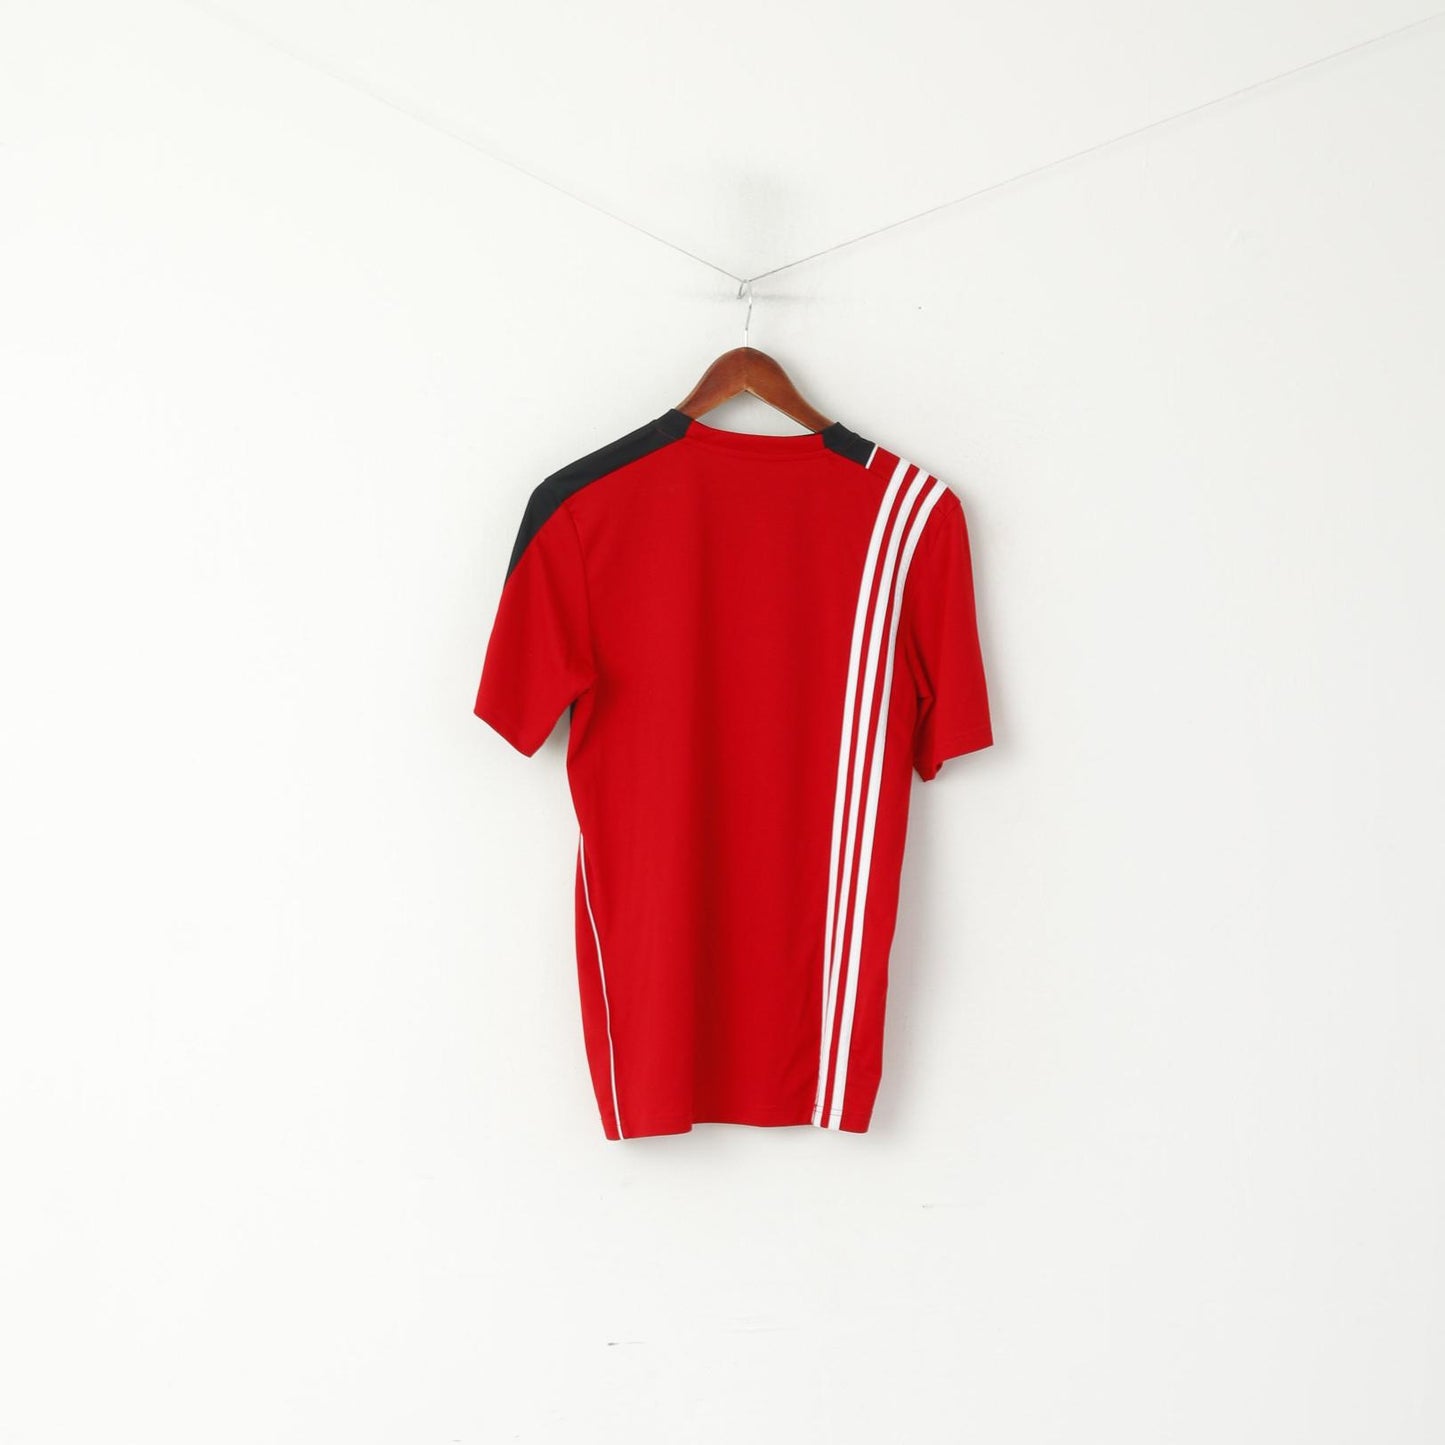 Adidas Youth  15-16 Age 176 Shirt Red Training Football Jersey Big Logo Top